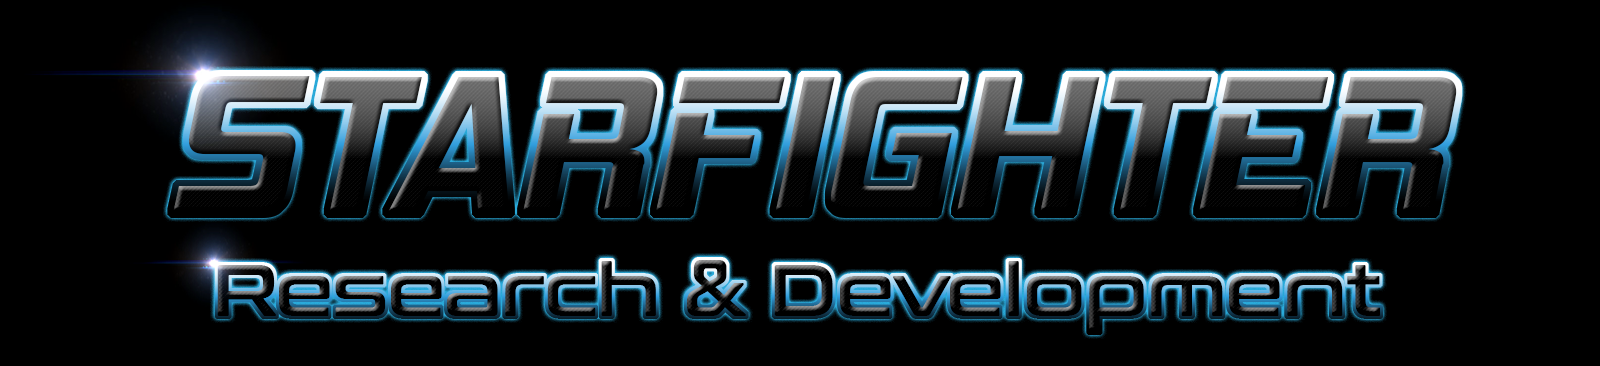 StarFighter R&D HD Edition